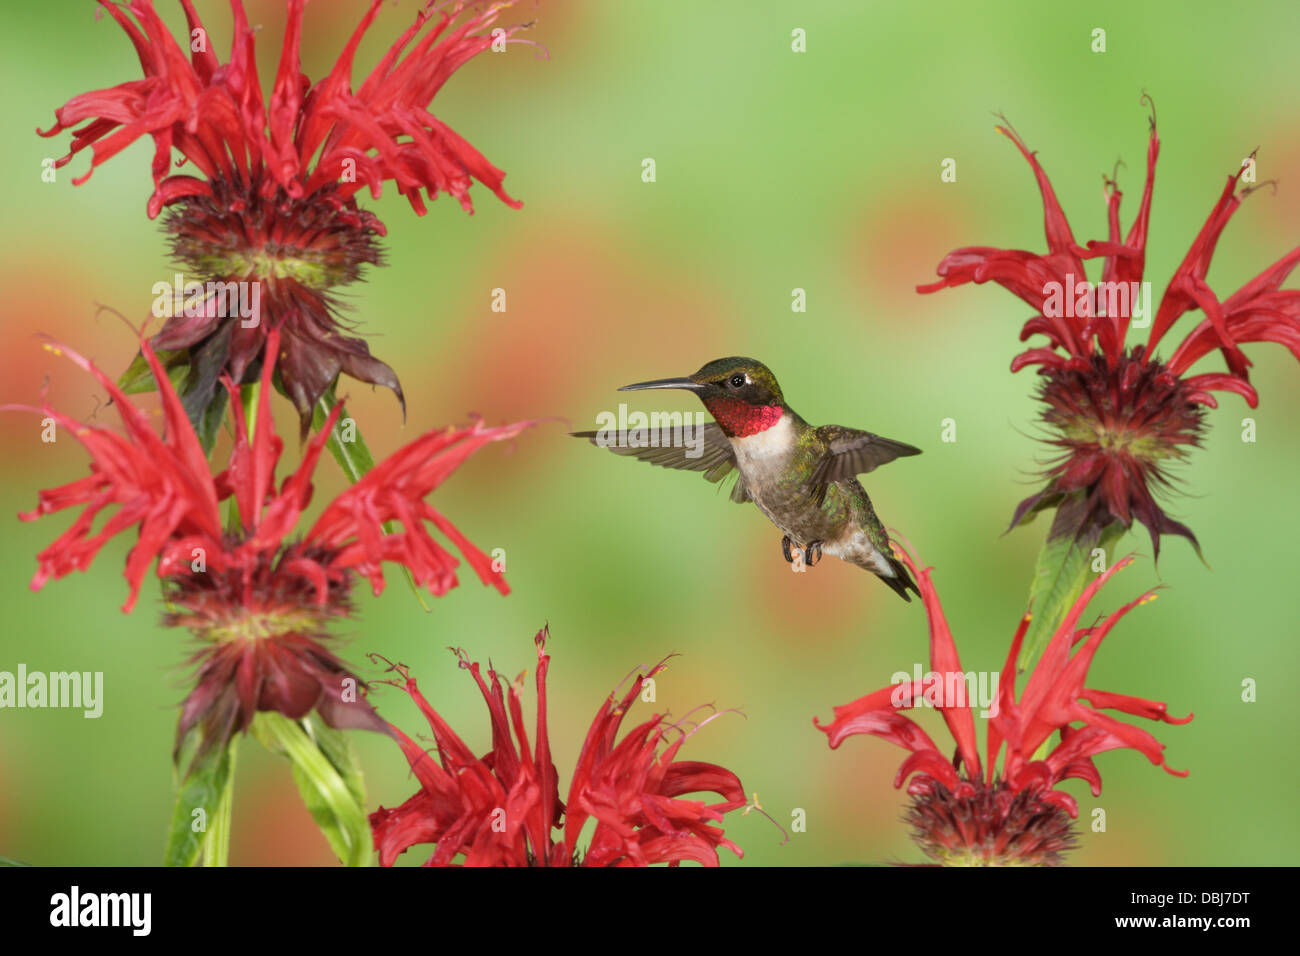 Hombre de rubí de garganta Hummingbird rondando buscando néctar de abeja bálsamo flores floraciones Foto de stock